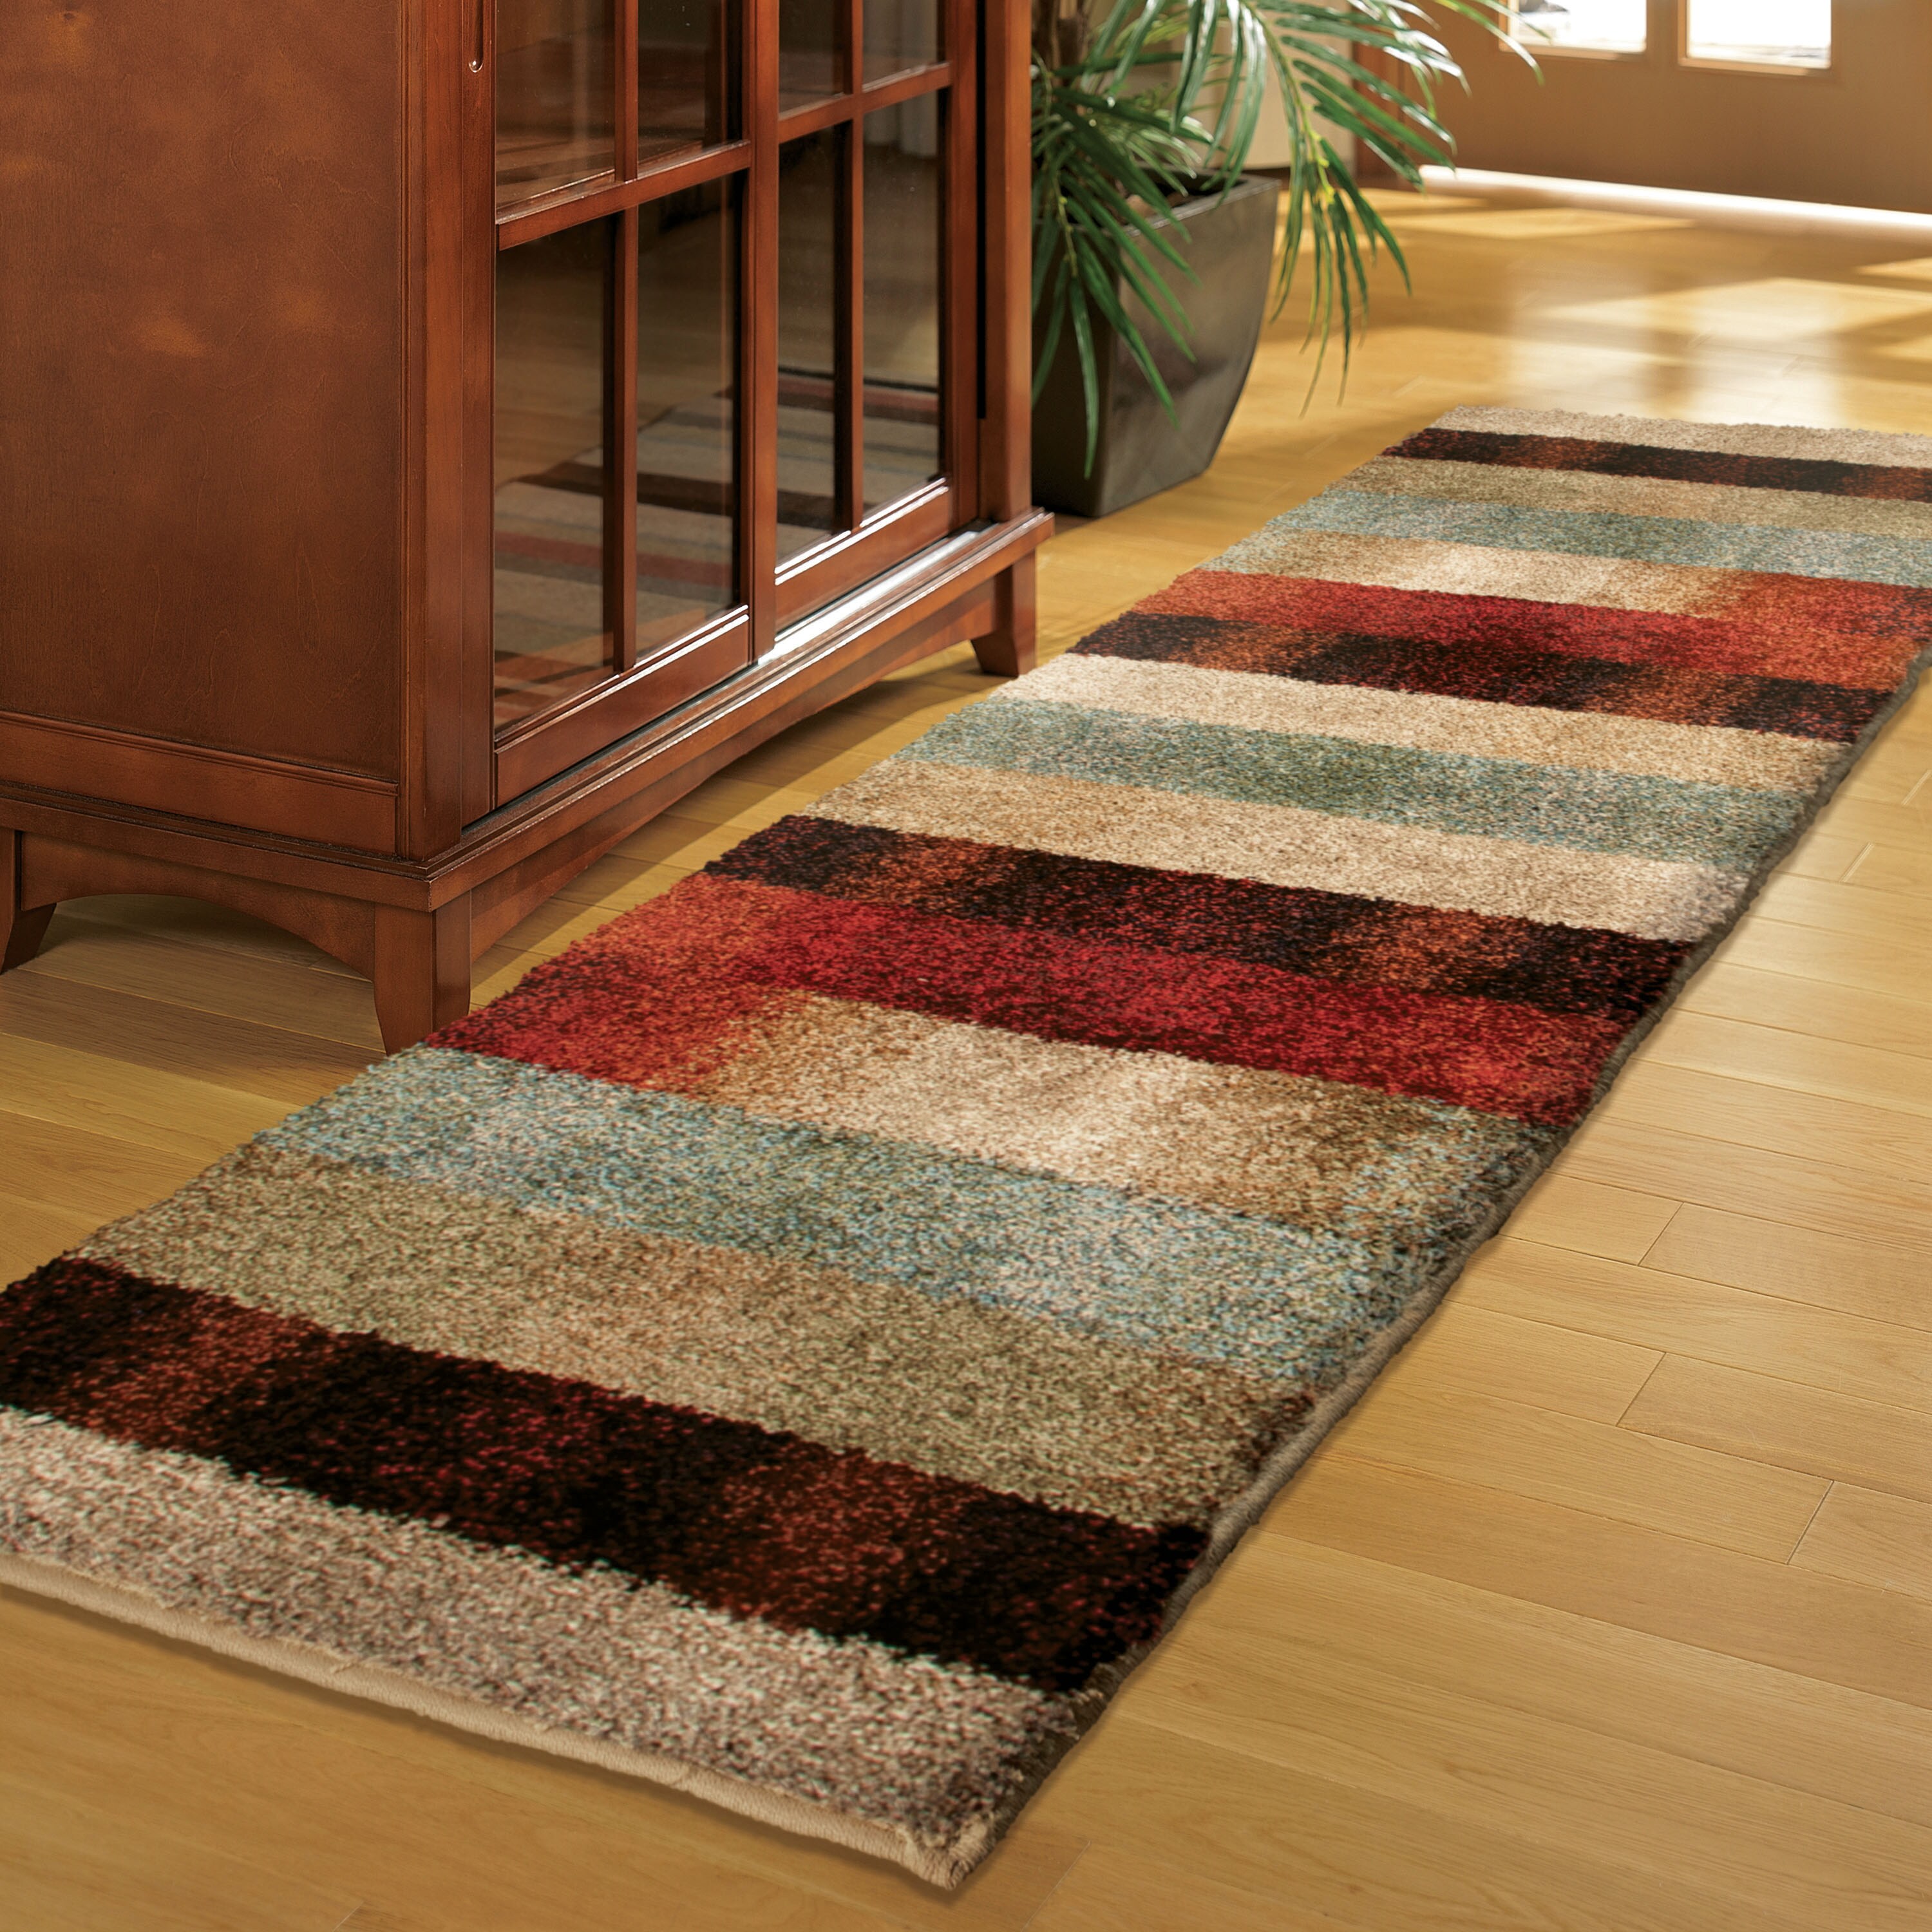 Multicolour Striped Non Slip Area Rug Mat Floor Home Small Large Runner Doormat 